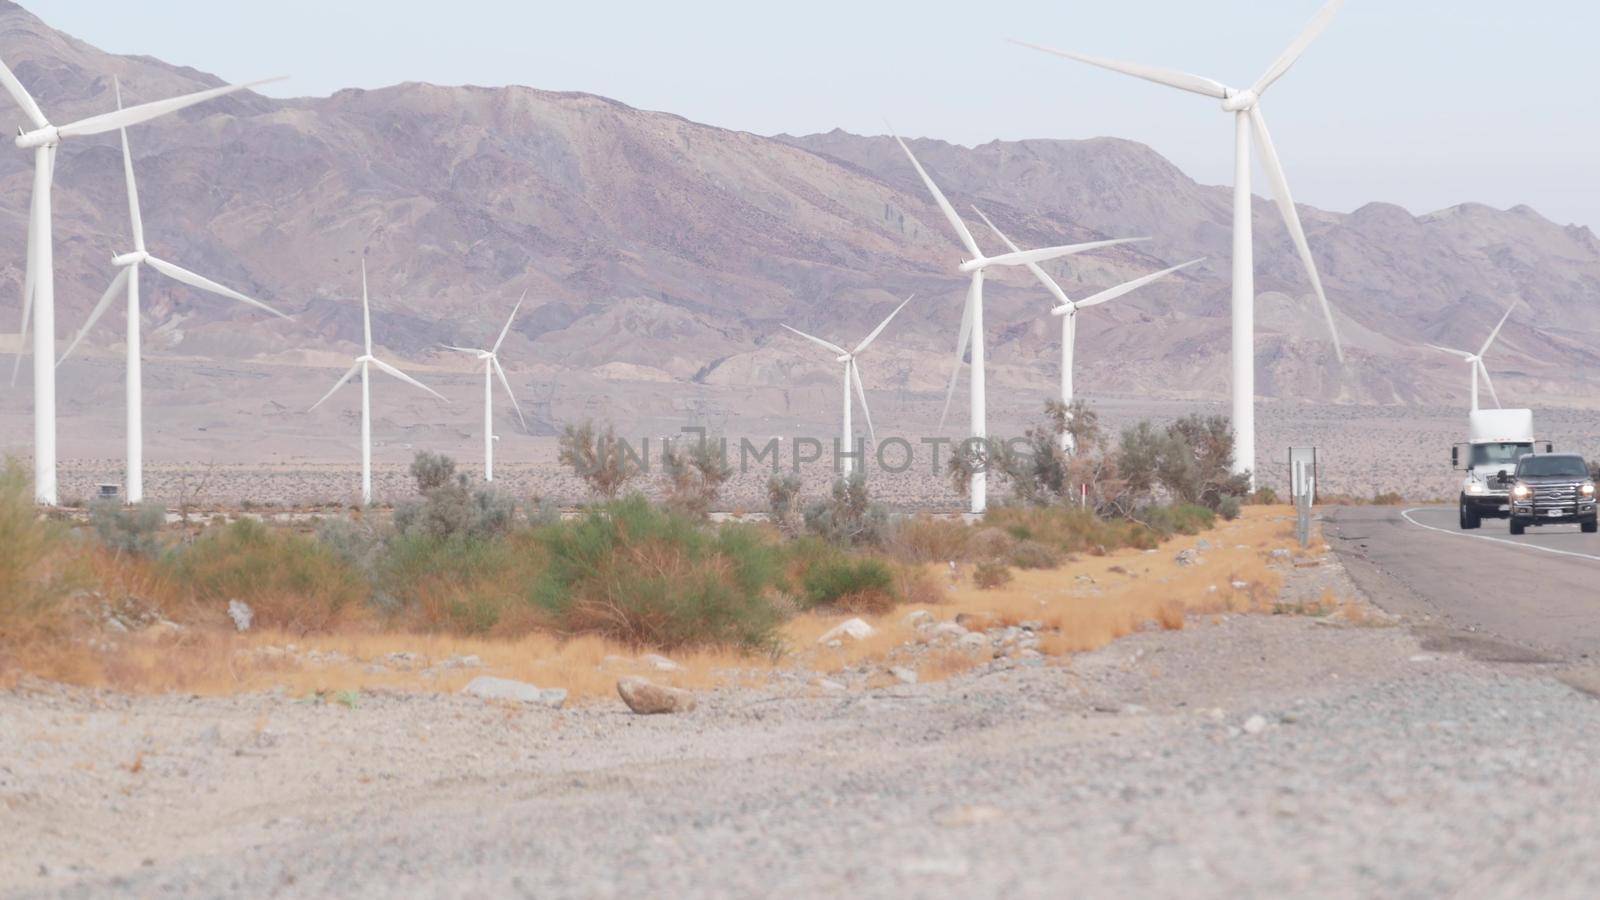 Windmills turbine rotating, wind farm or power plant, alternative green renewable energy generators, industrial field in California desert USA. Electricity generation on windfarm. El Centro, Kumeyaay.